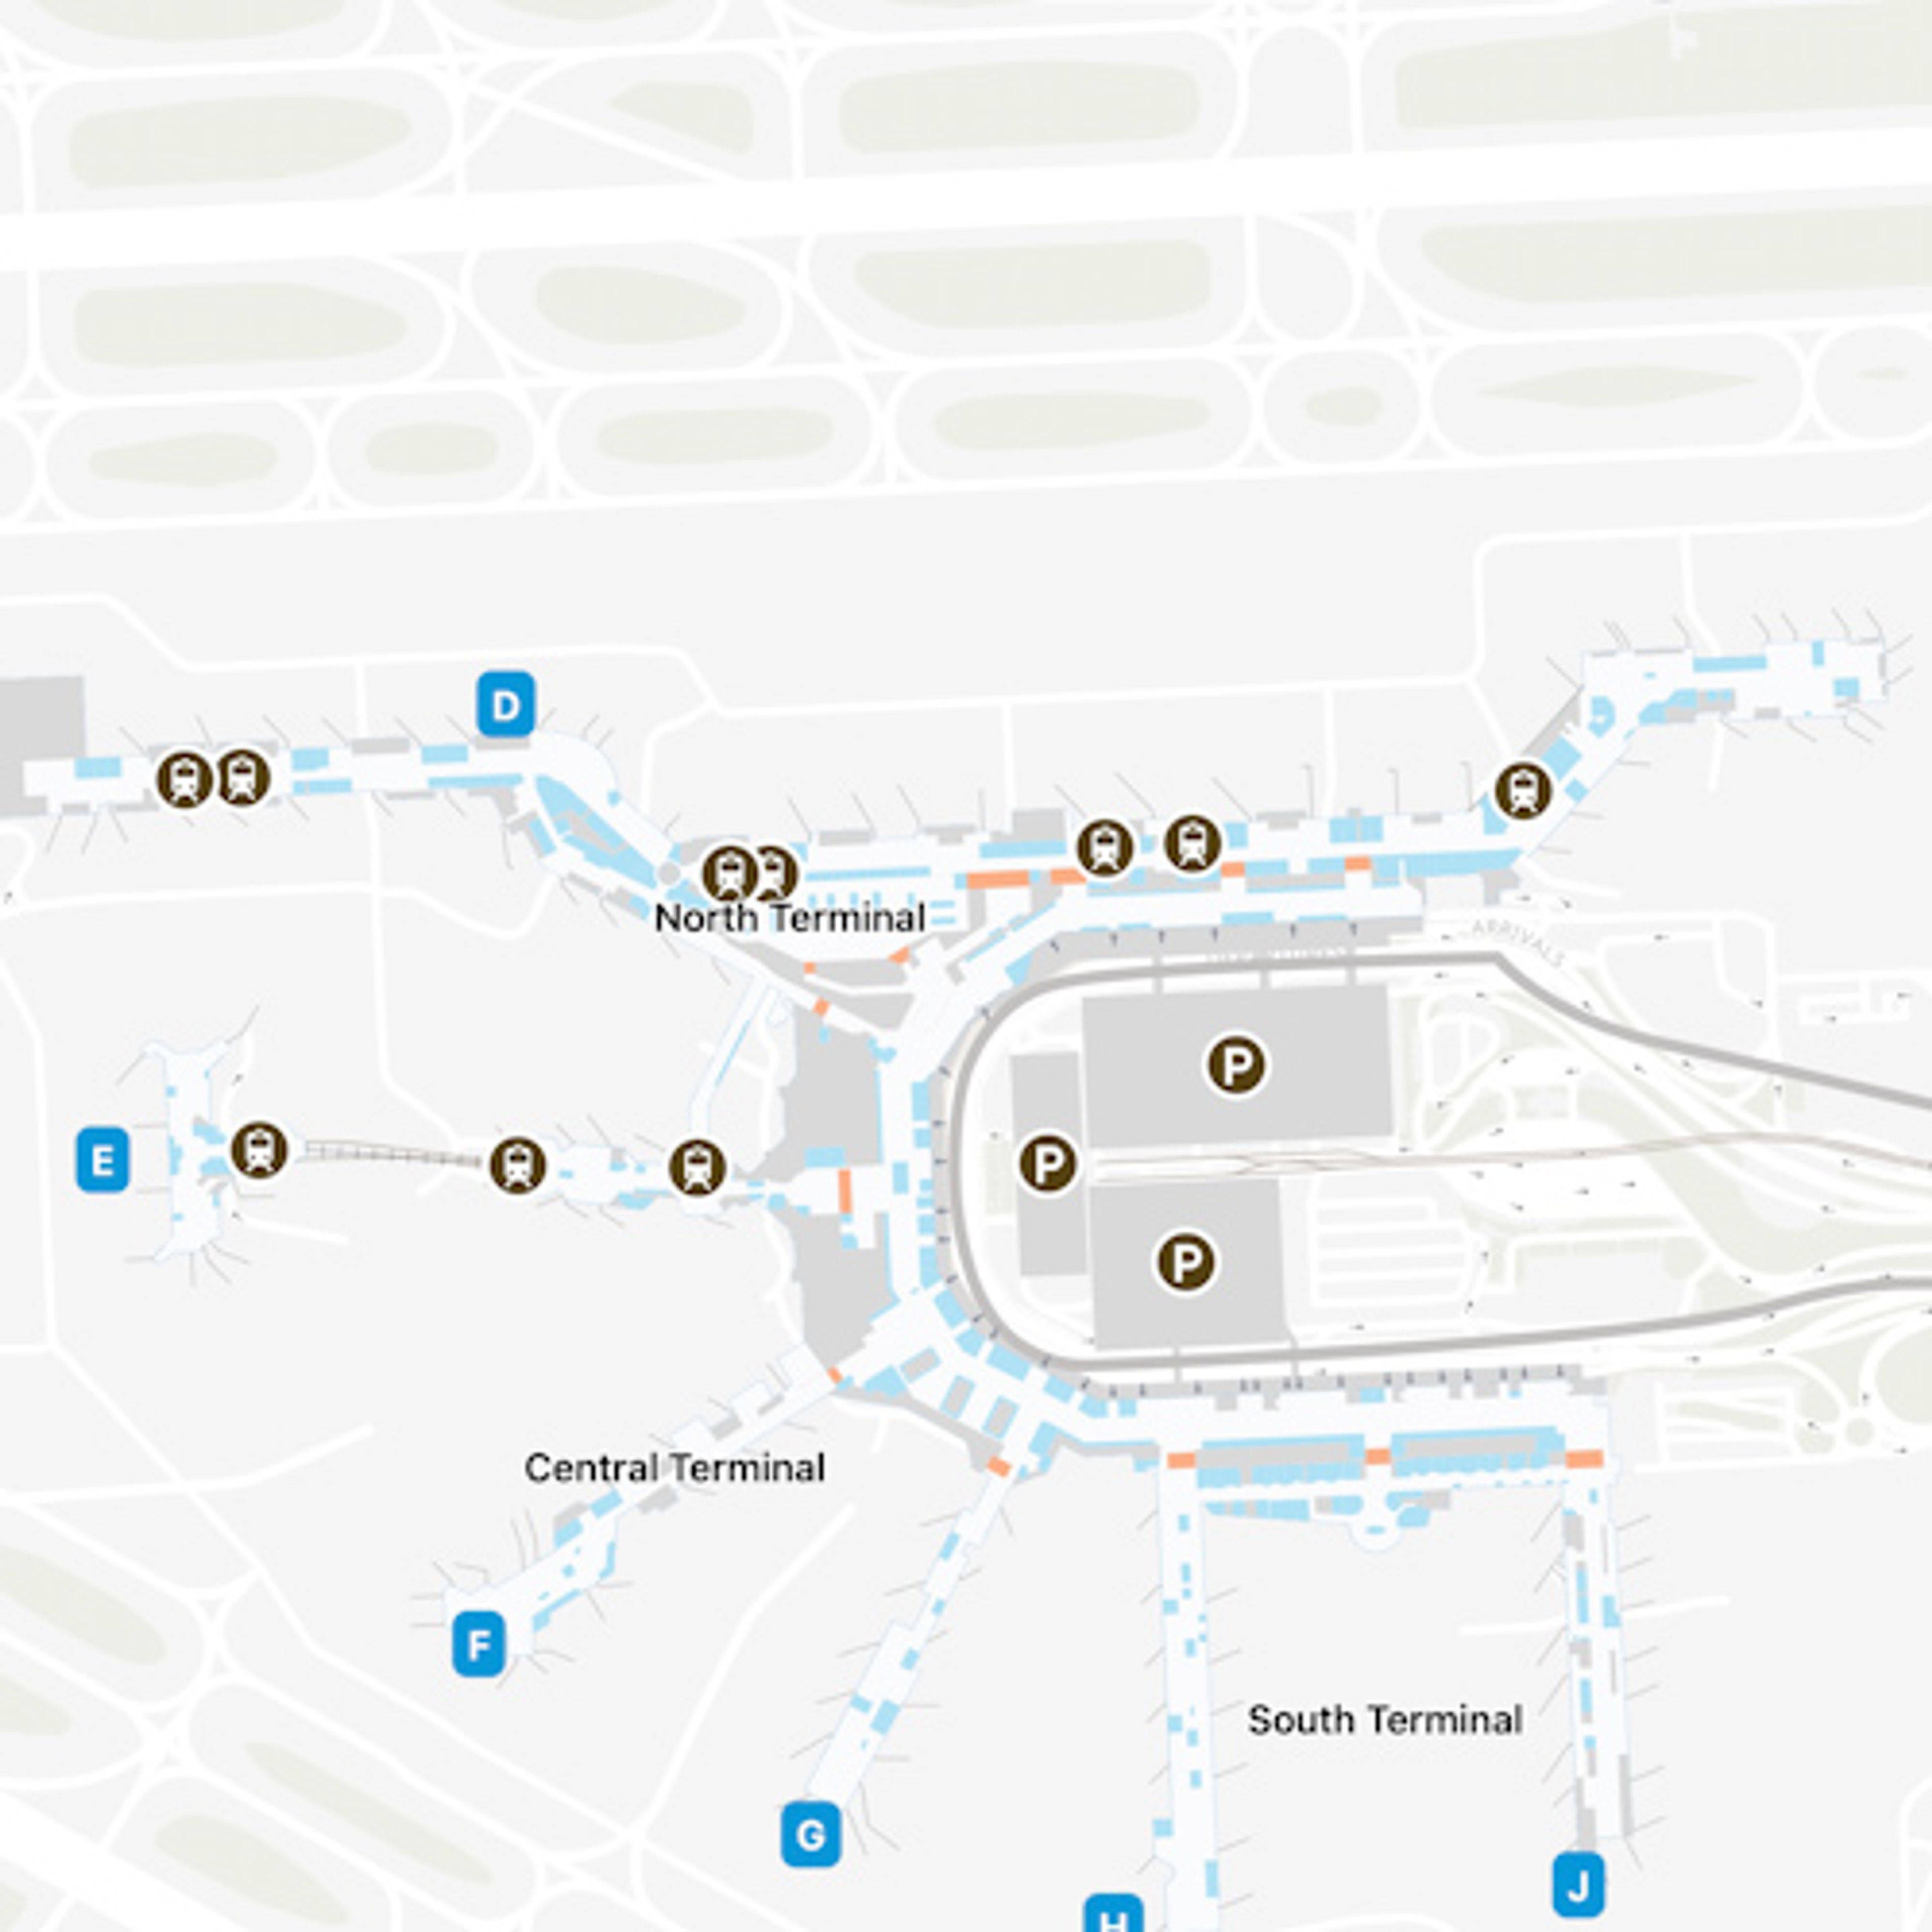 MIA Concourse D Map